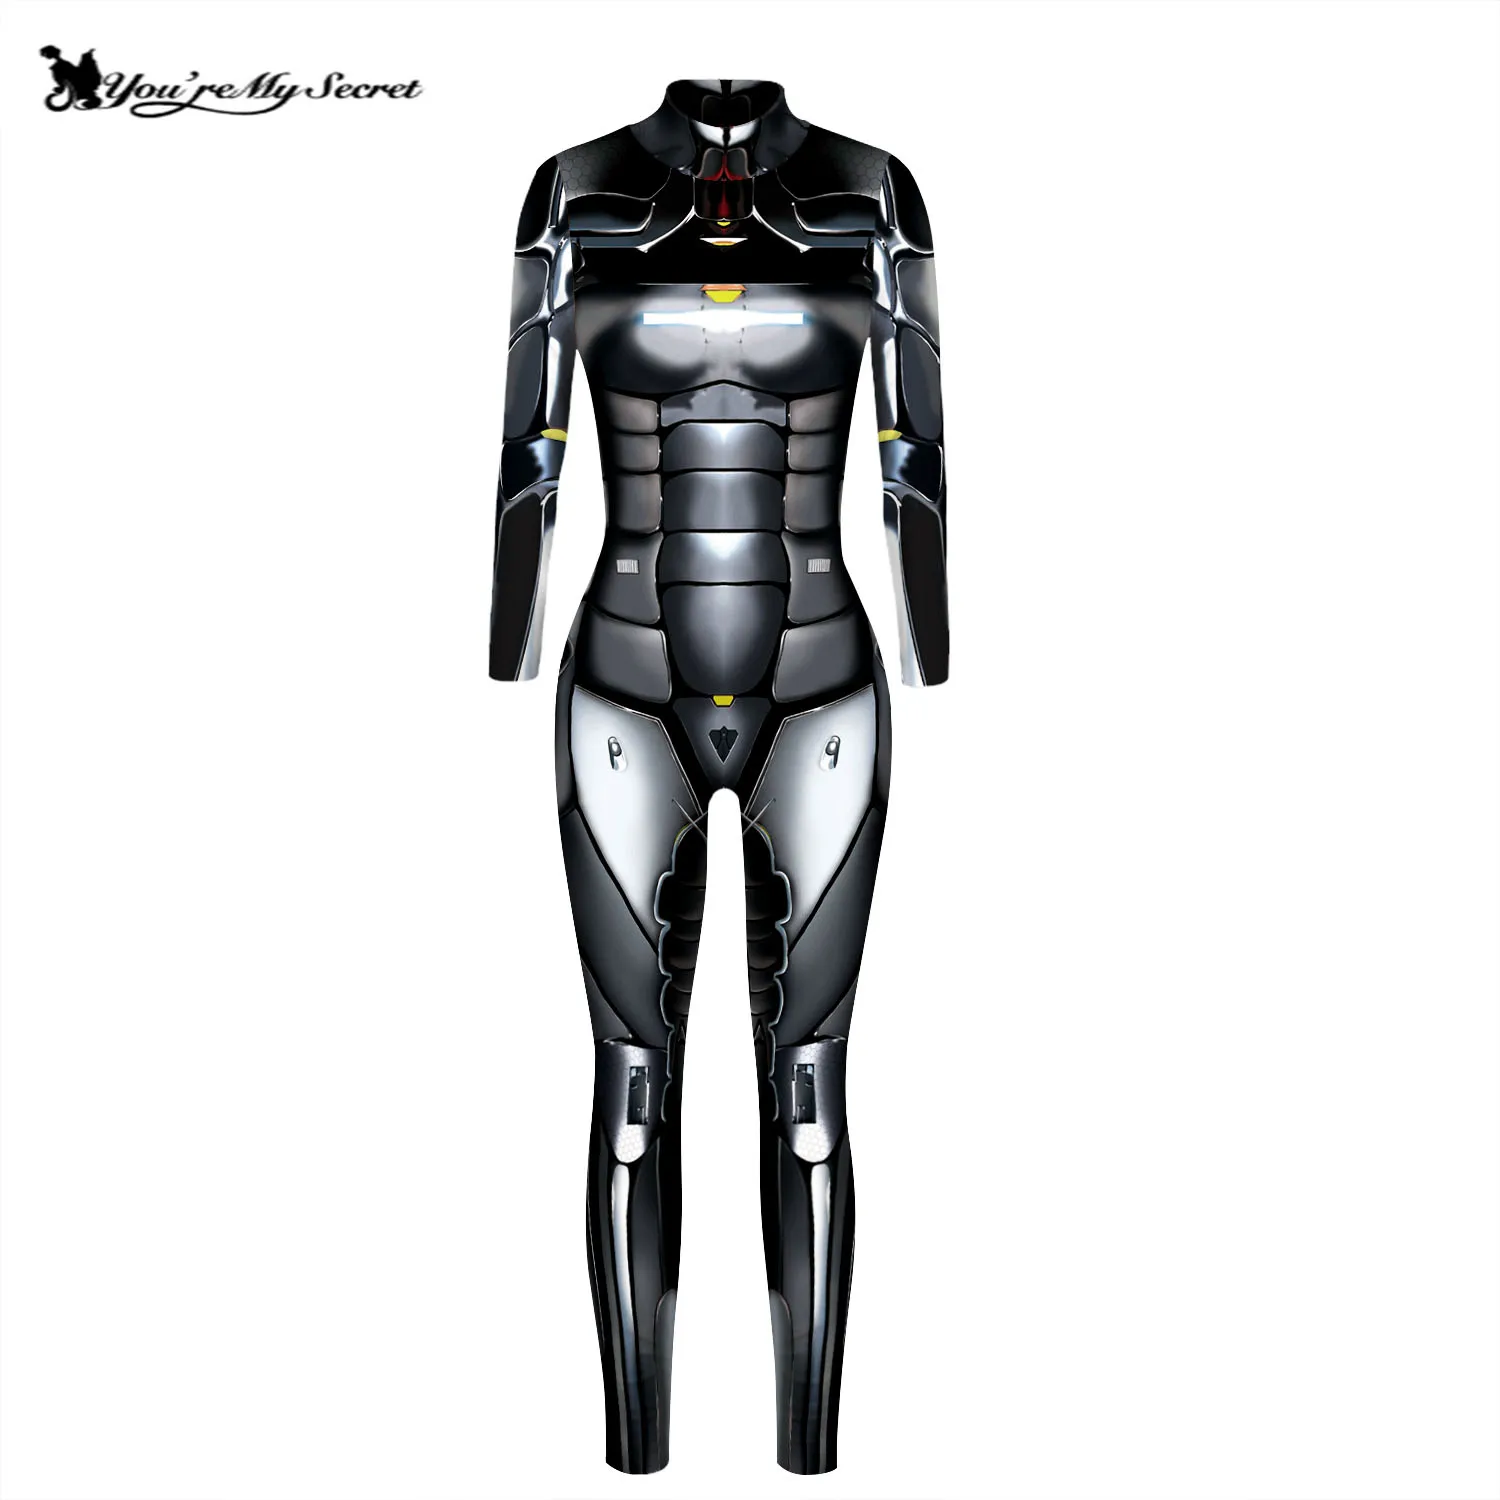 [You're My Secret] Halloween Carnival Future Technology Cosplay Costume Steampunk Zentai Bodysuit Fancy Suit Bodysuit images - 6